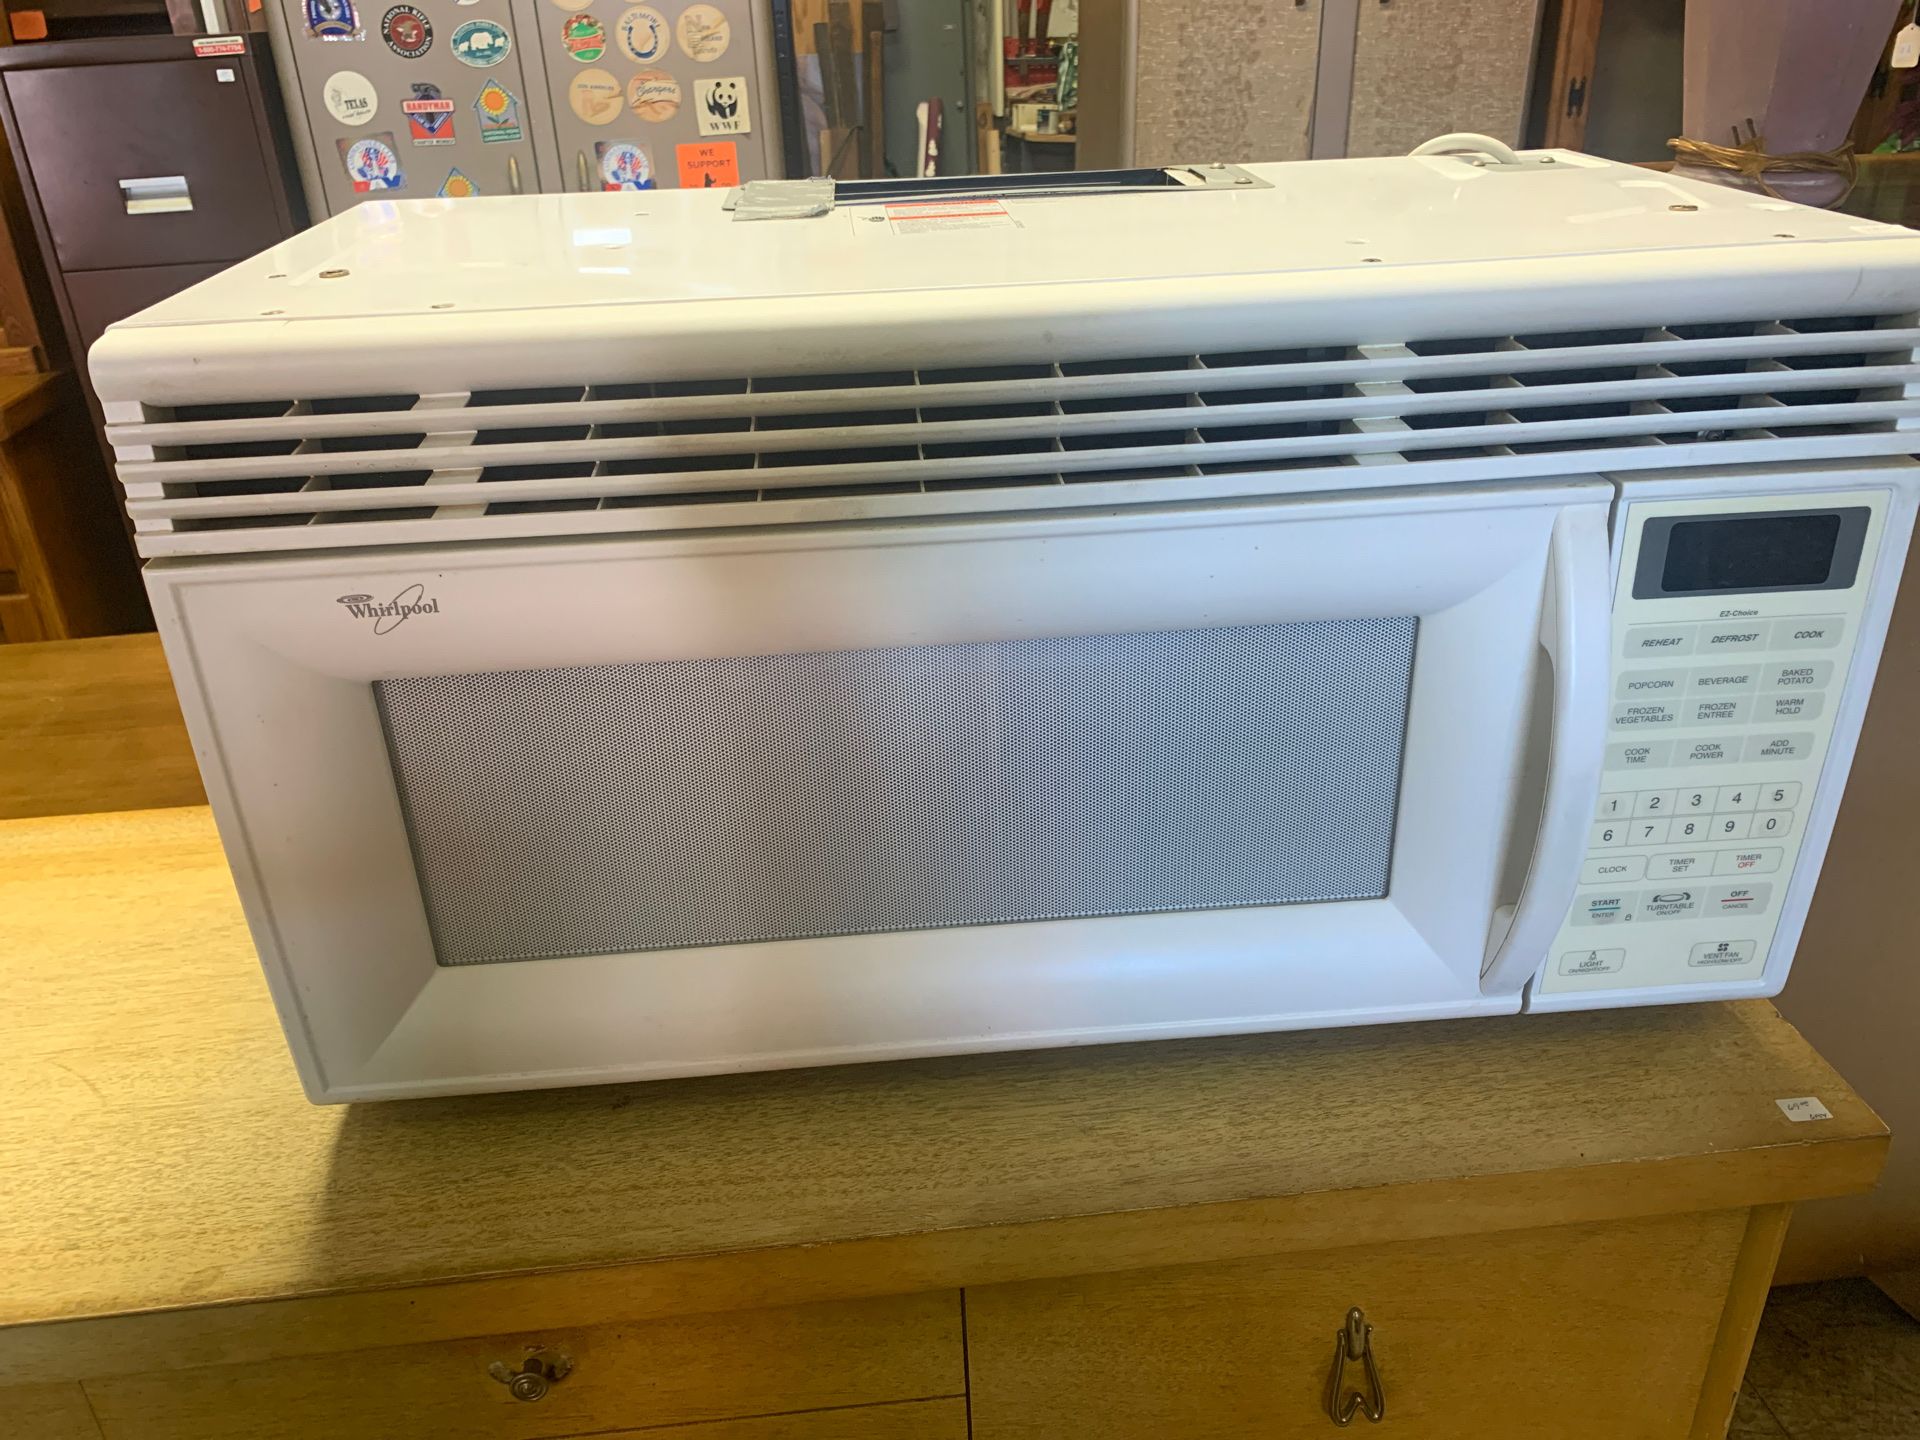 Microwave (white)